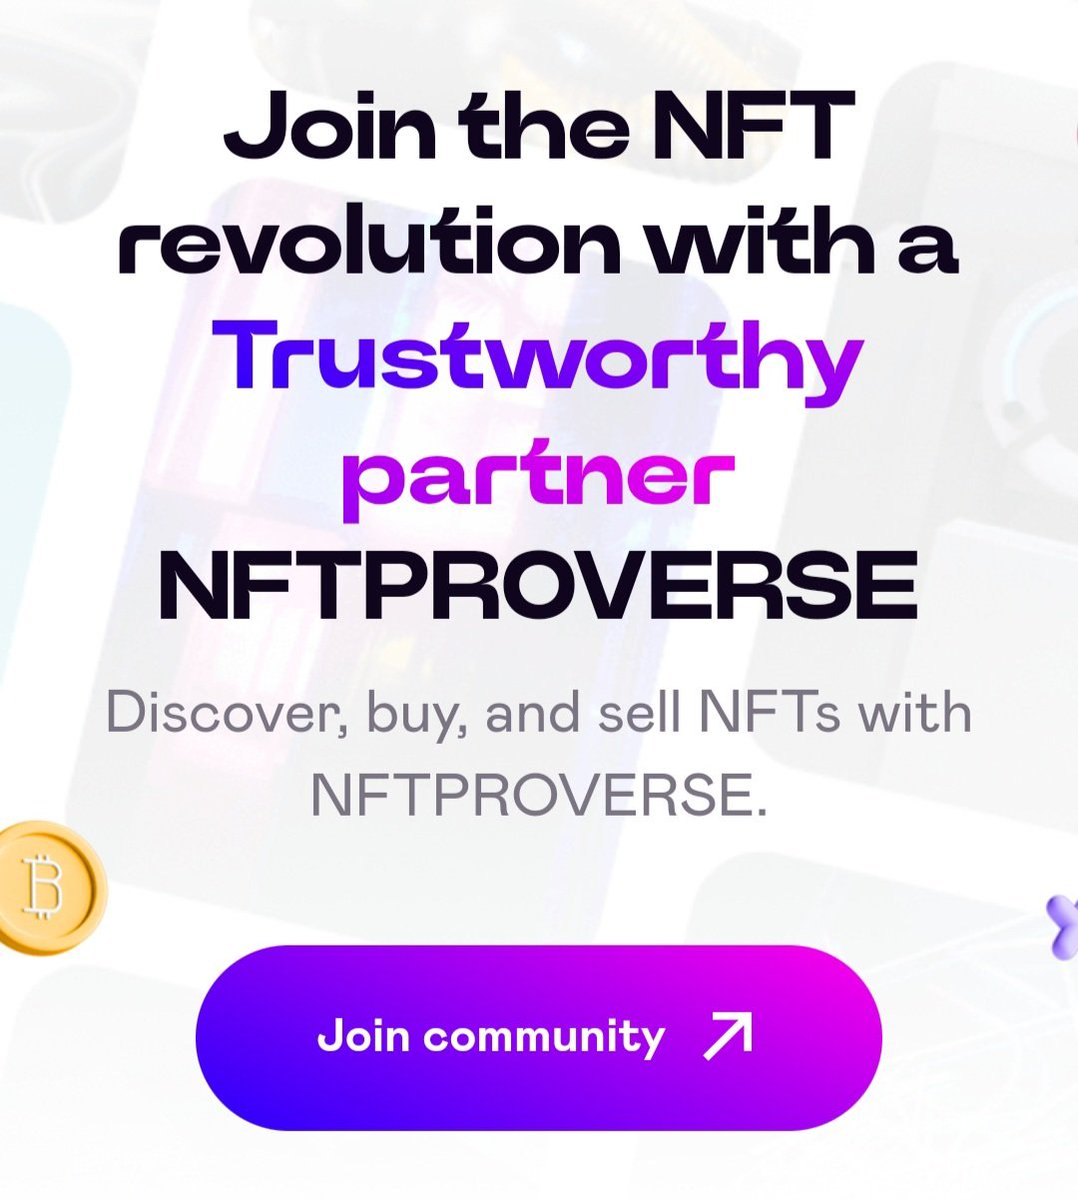 Drop your #NFT 👇Retweet to get Retweet
#NFTCommunity #NFTConnections #NFTCommunityEngagement #NFTCollectives #NFTartists #NFTSupport #NFTArtShowcase #NFTTwitterSpacesConversation #NFTArtShowcase  #NFTCommunityChallenge #NFTTwitterSpaces #NFTMarketWatch #NFTDropAlert #NFTs